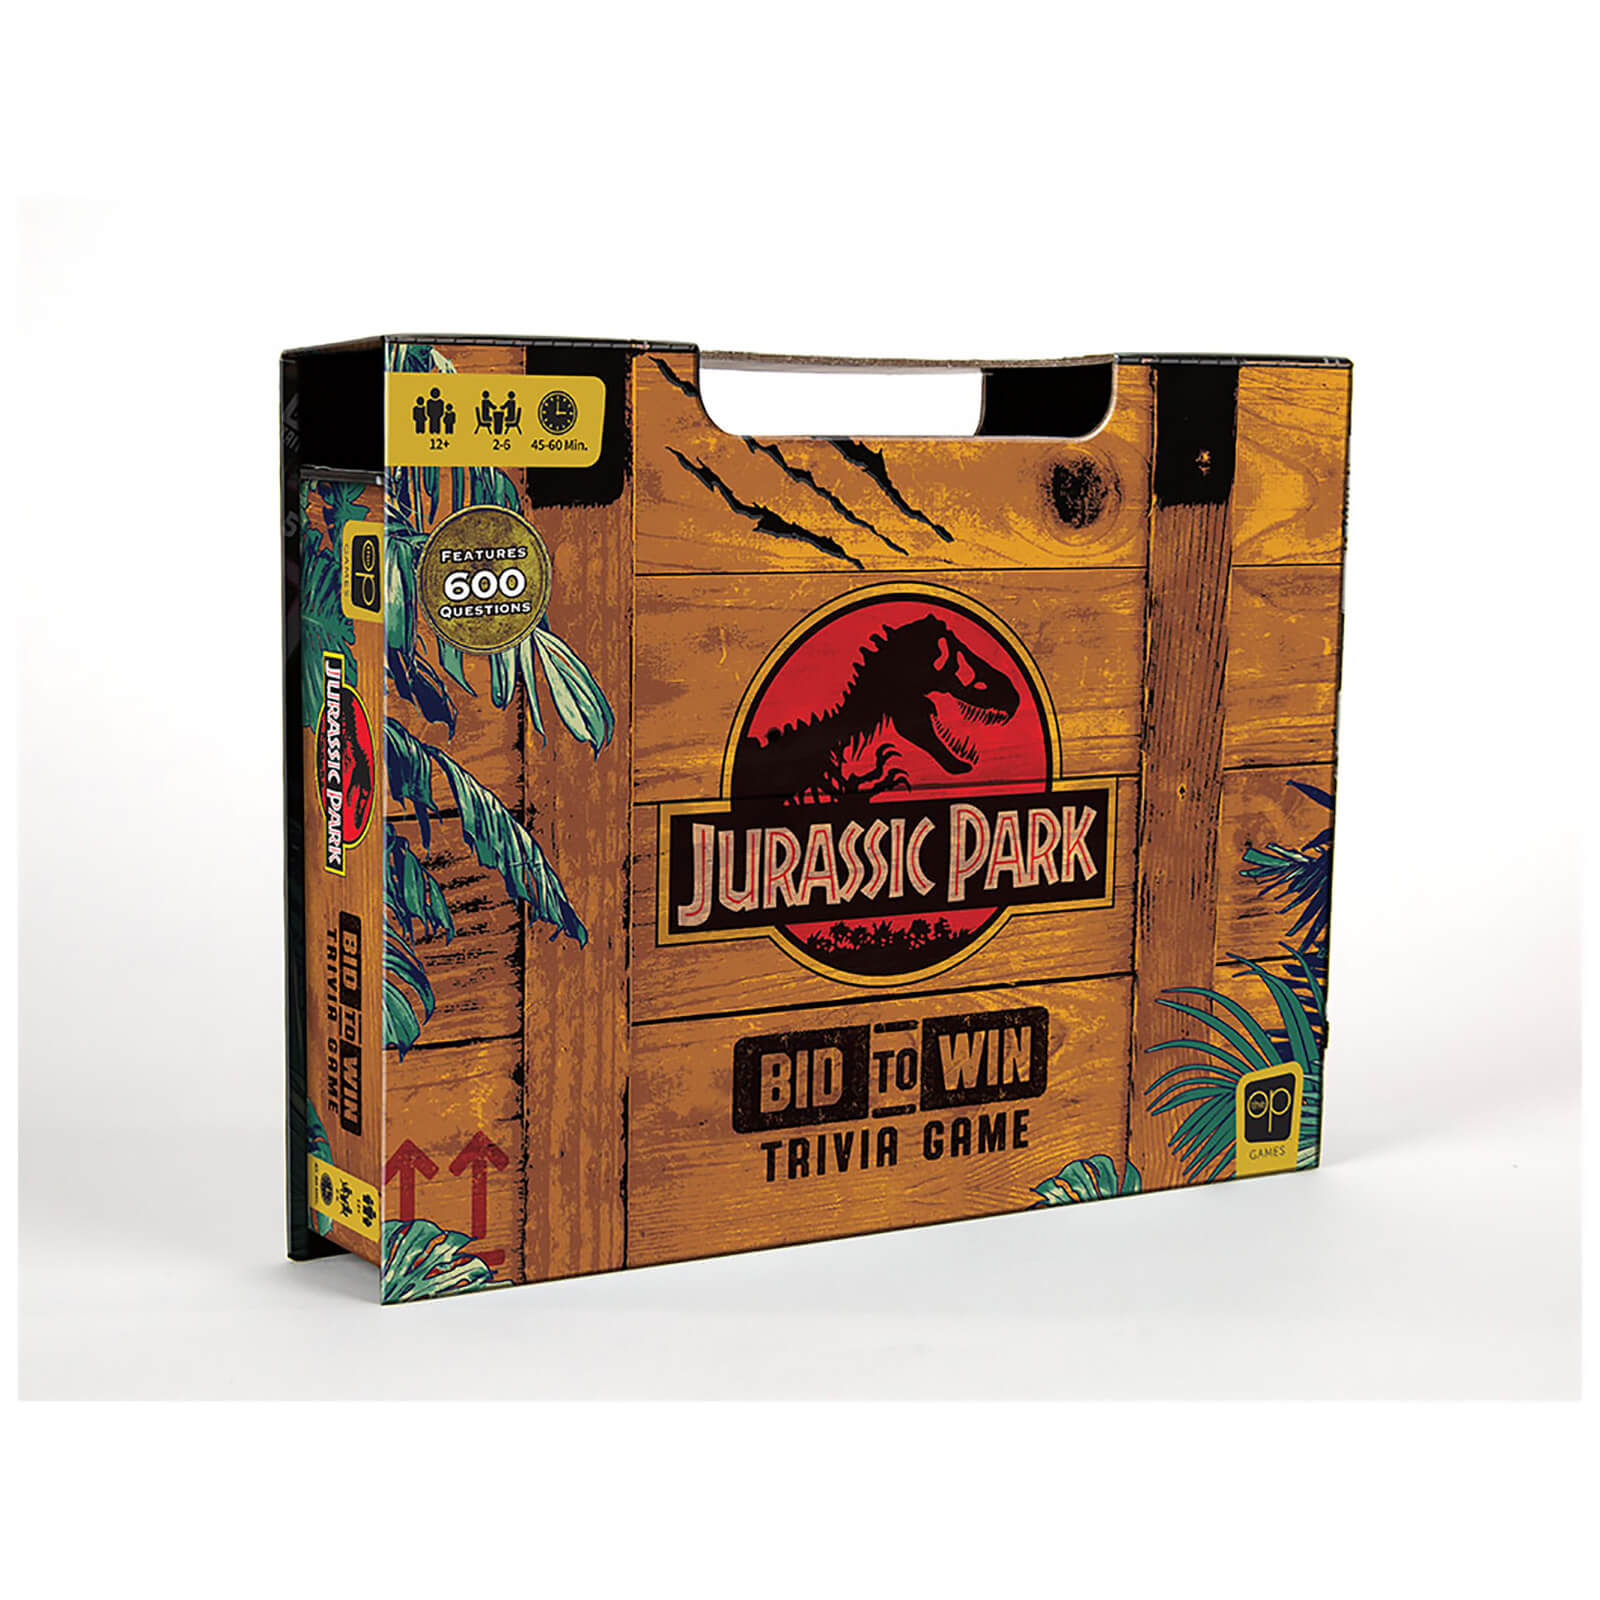 Bid To Win: Jurassic Park Trivia Game